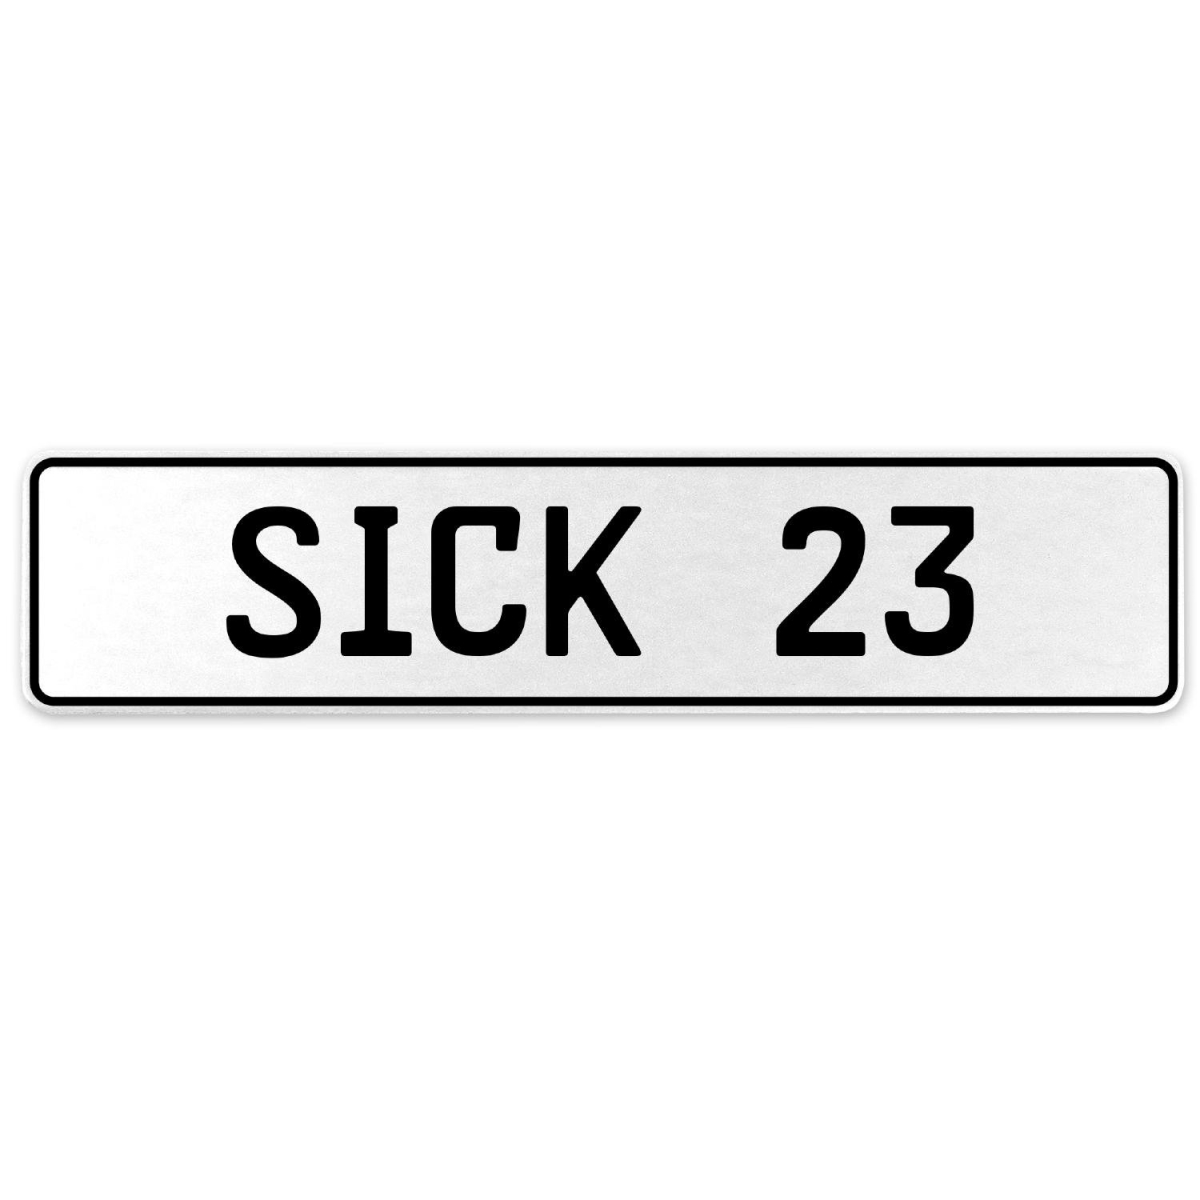 554323 Sick 23 - White Aluminum Street Sign Mancave Euro Plate Name Door Sign Wall